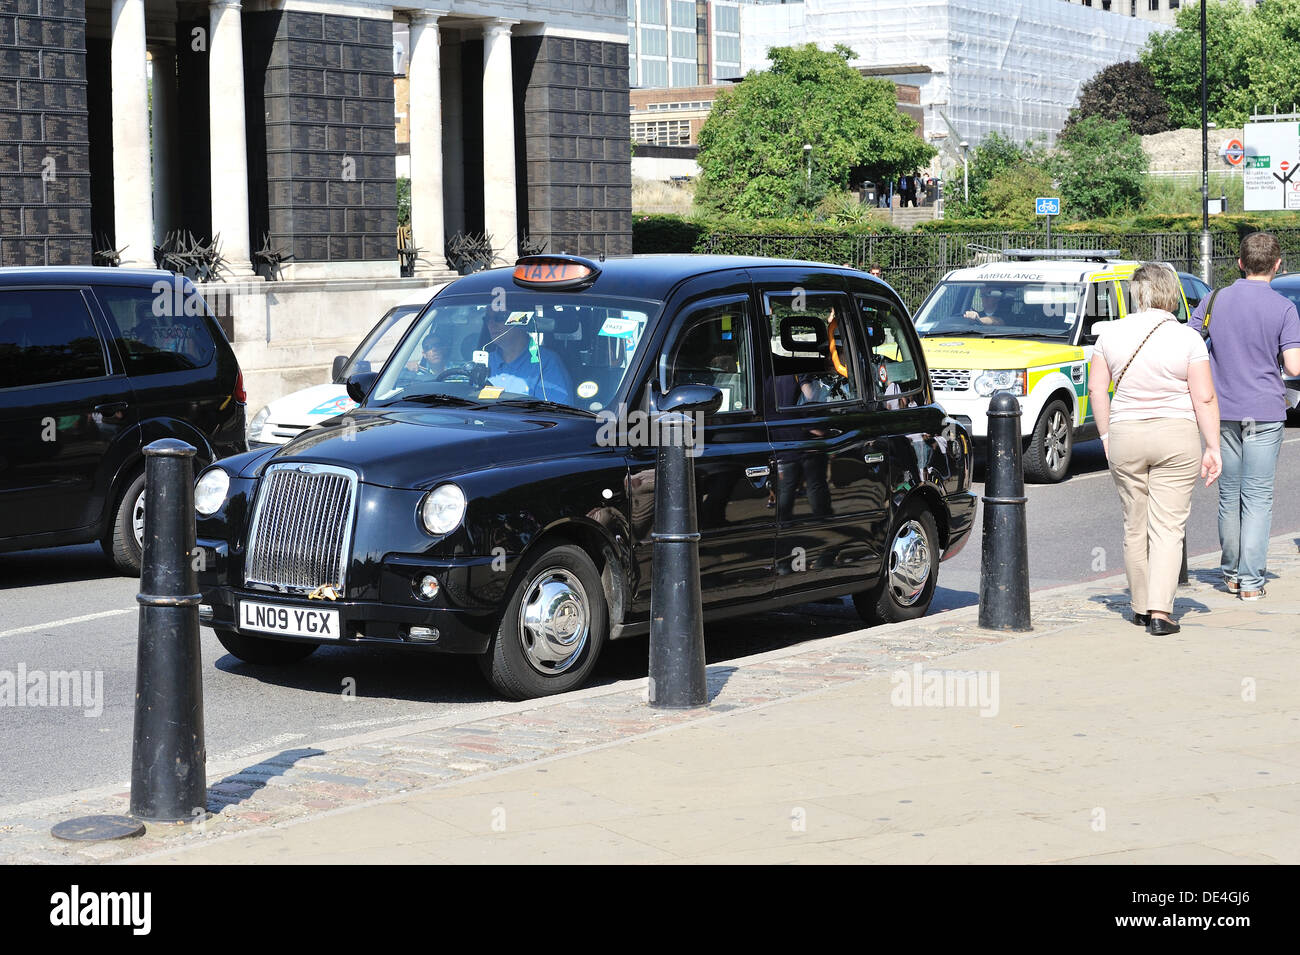 Black London Taxi Cab Stock Photo